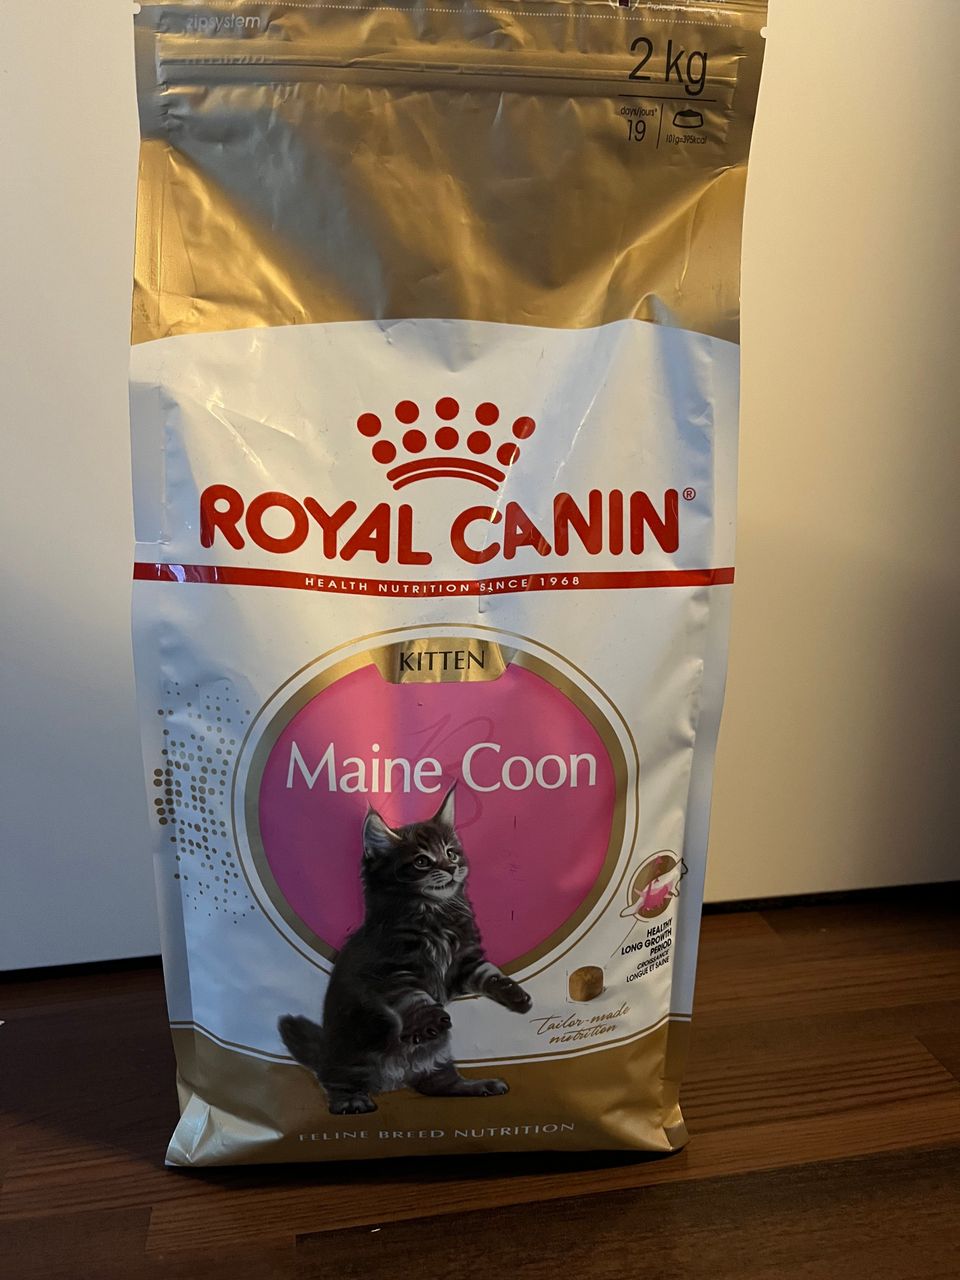 Royal canin maine coon kitten